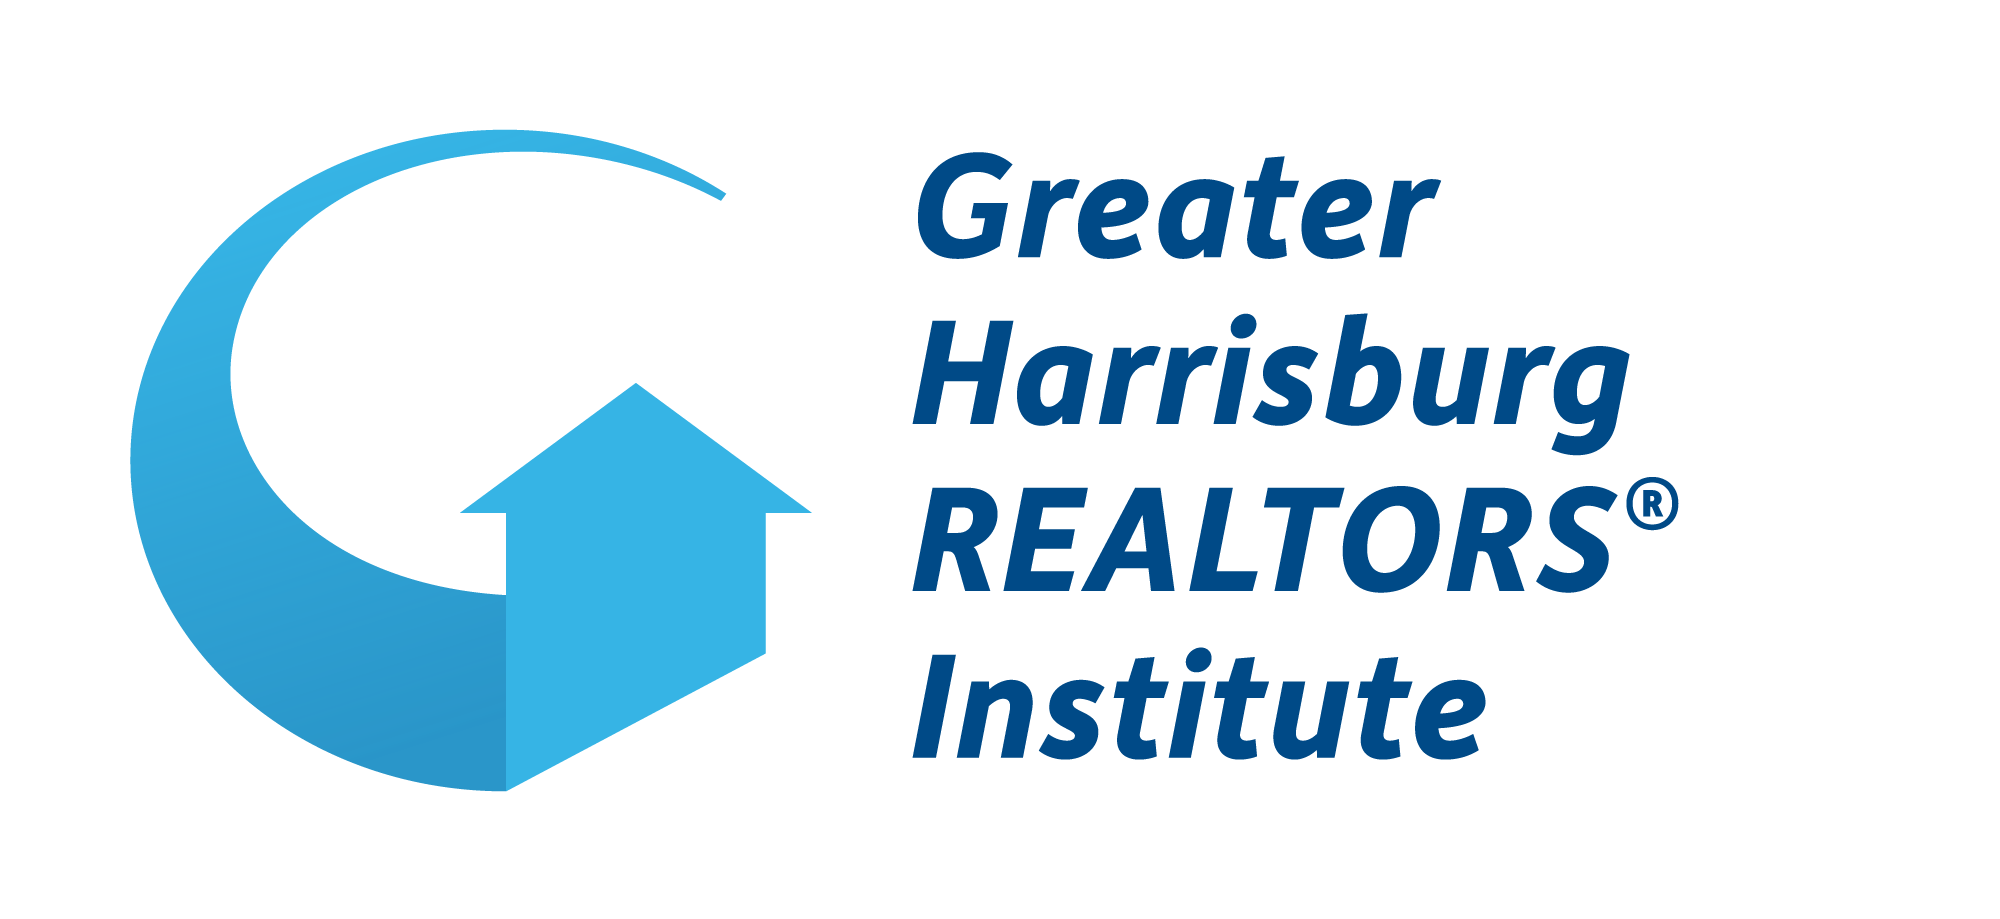 Greater Harrisburg REALTORS® Institute